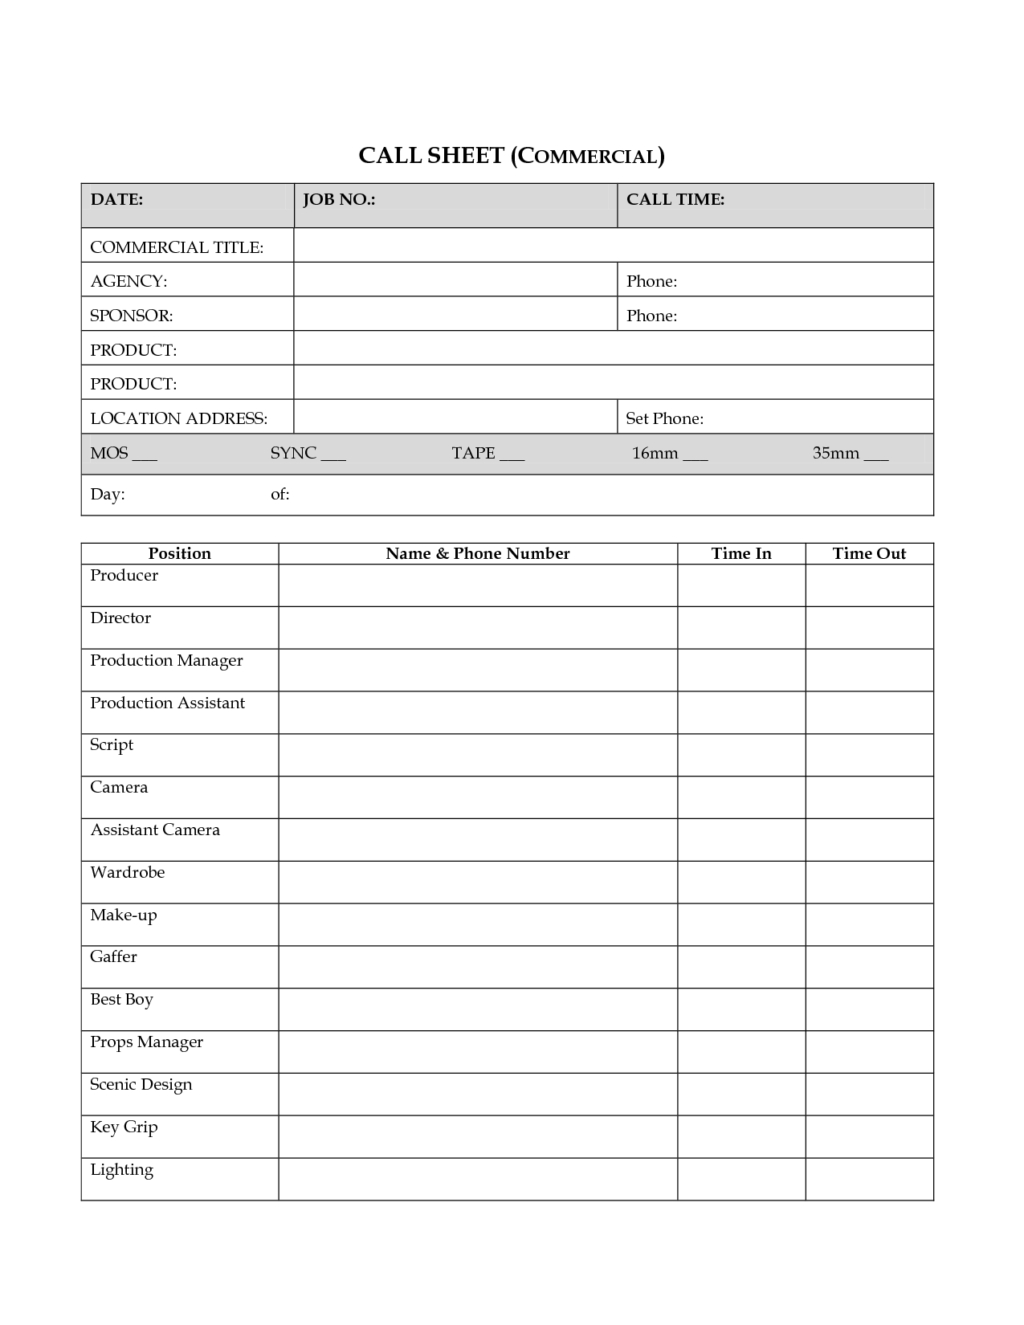 Terrific Call Sheet Template Sample For Commercial Intended For Blank Call Sheet Template